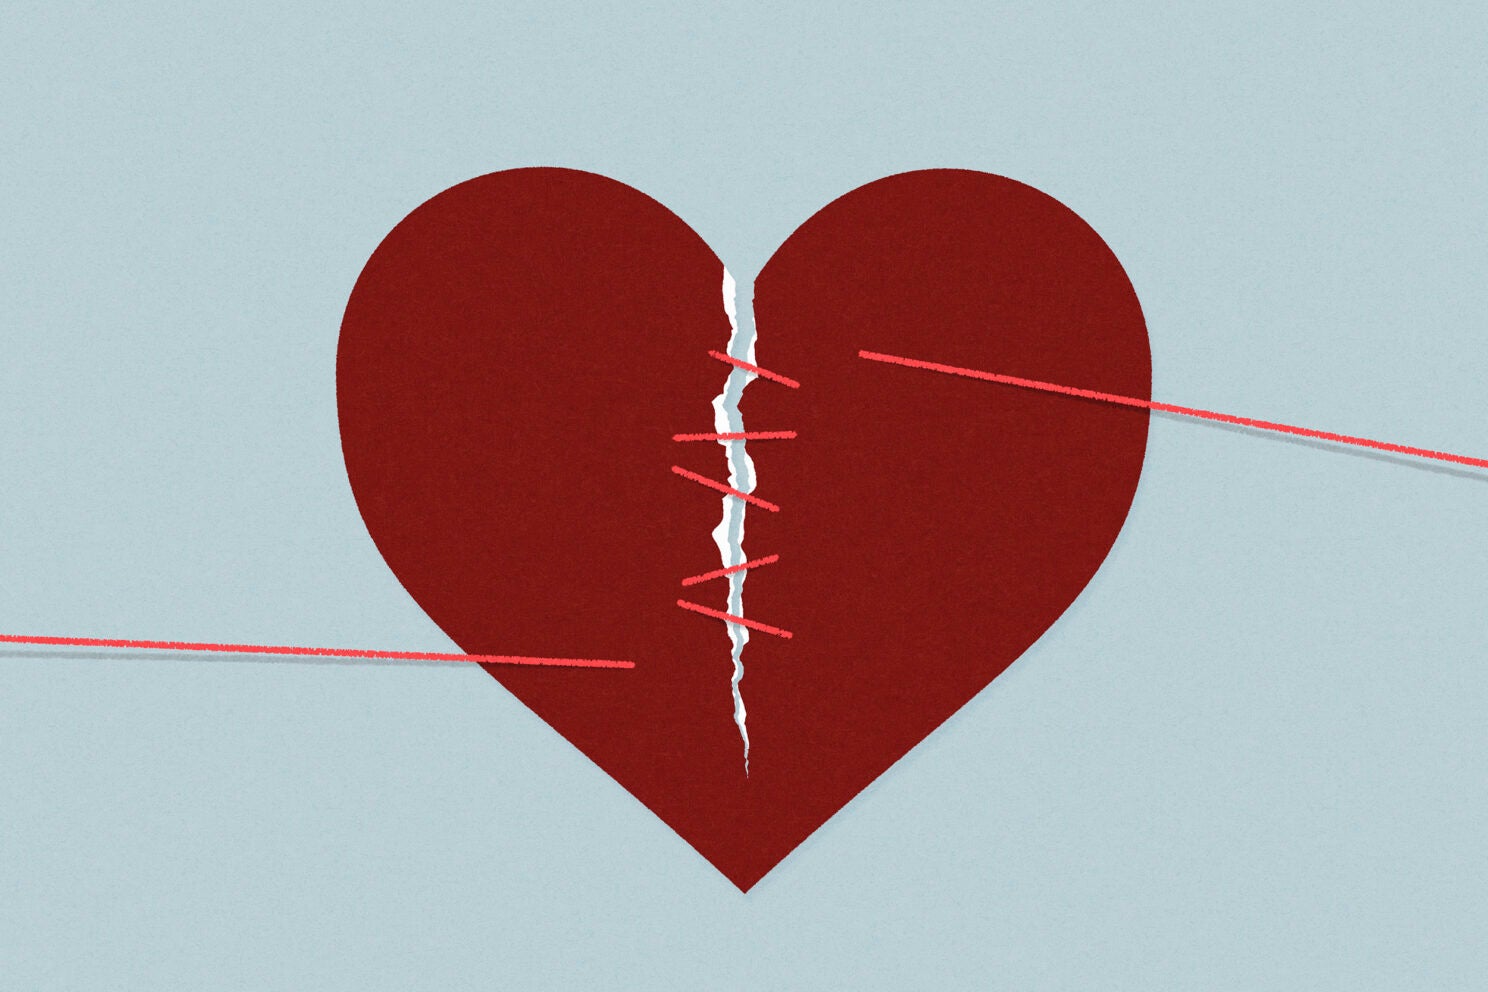 Illustration of broken heart mended by forgiveness.